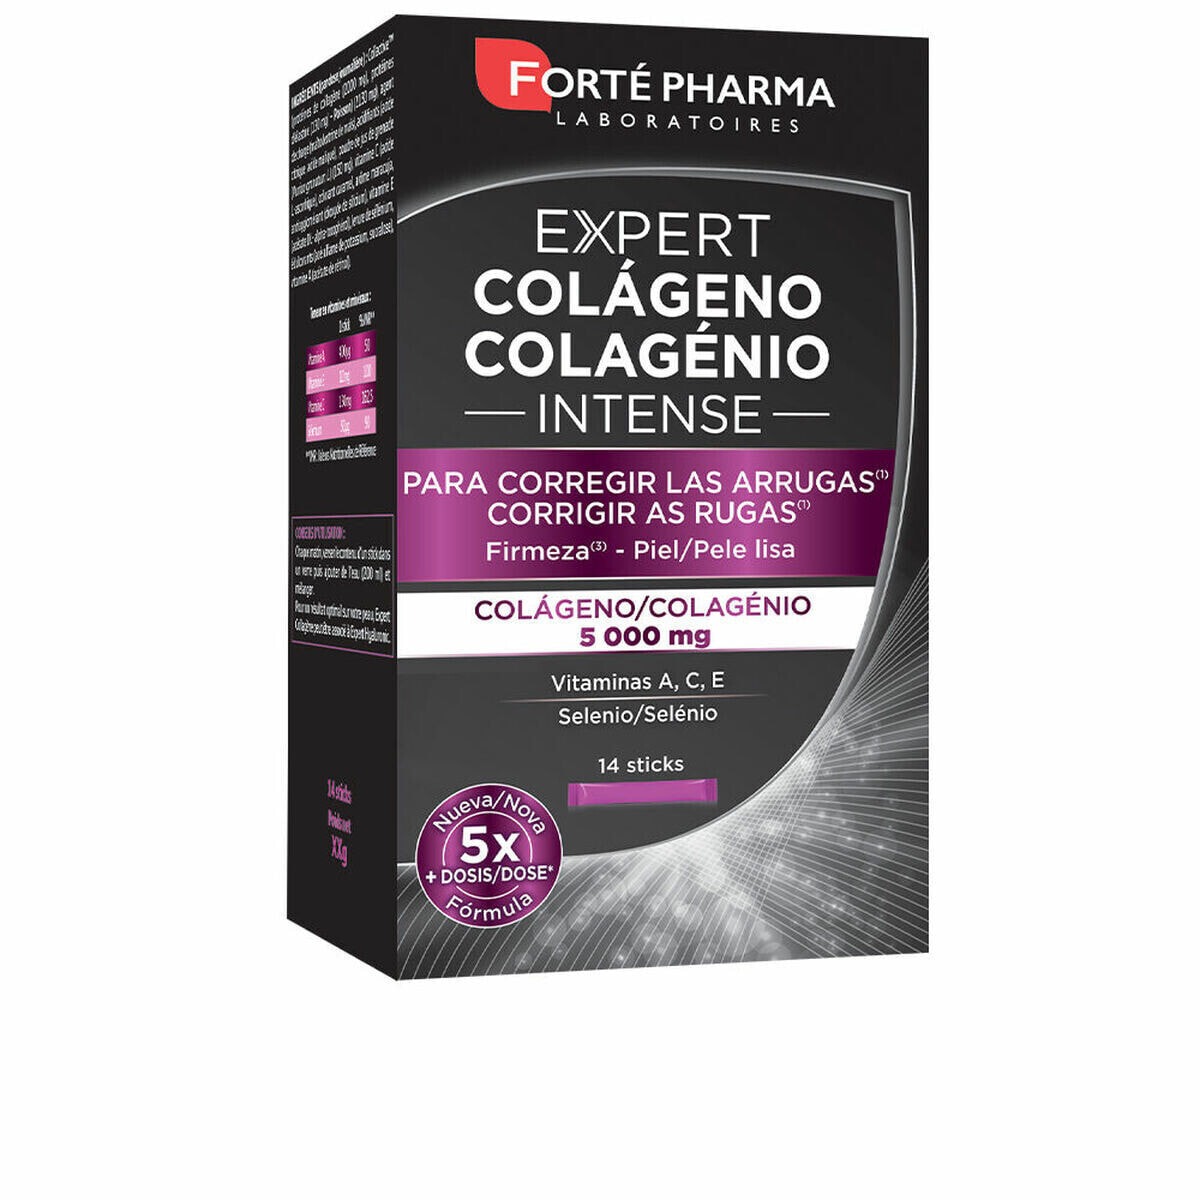 Collagen Forté Pharma Expert Intense Collagen 14 Units